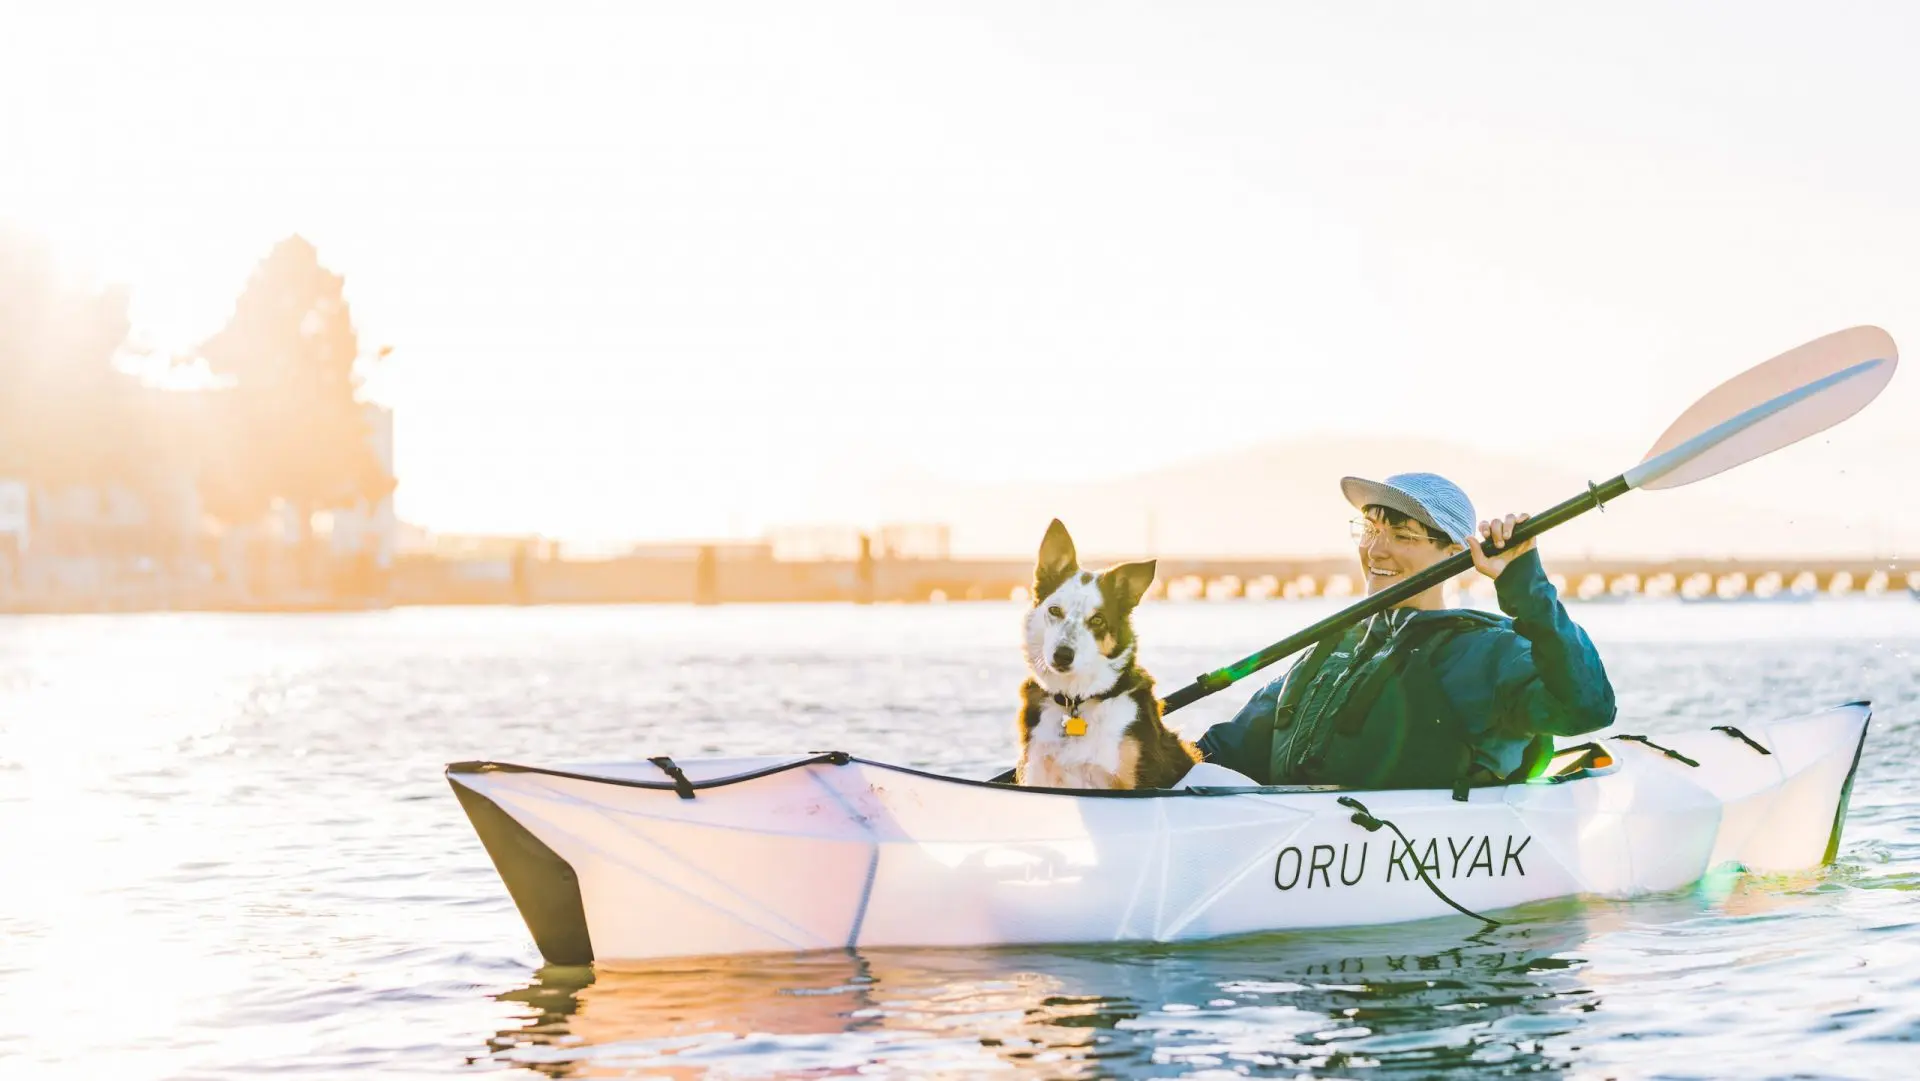 Oru Kayak - portable origami-inspired vessel